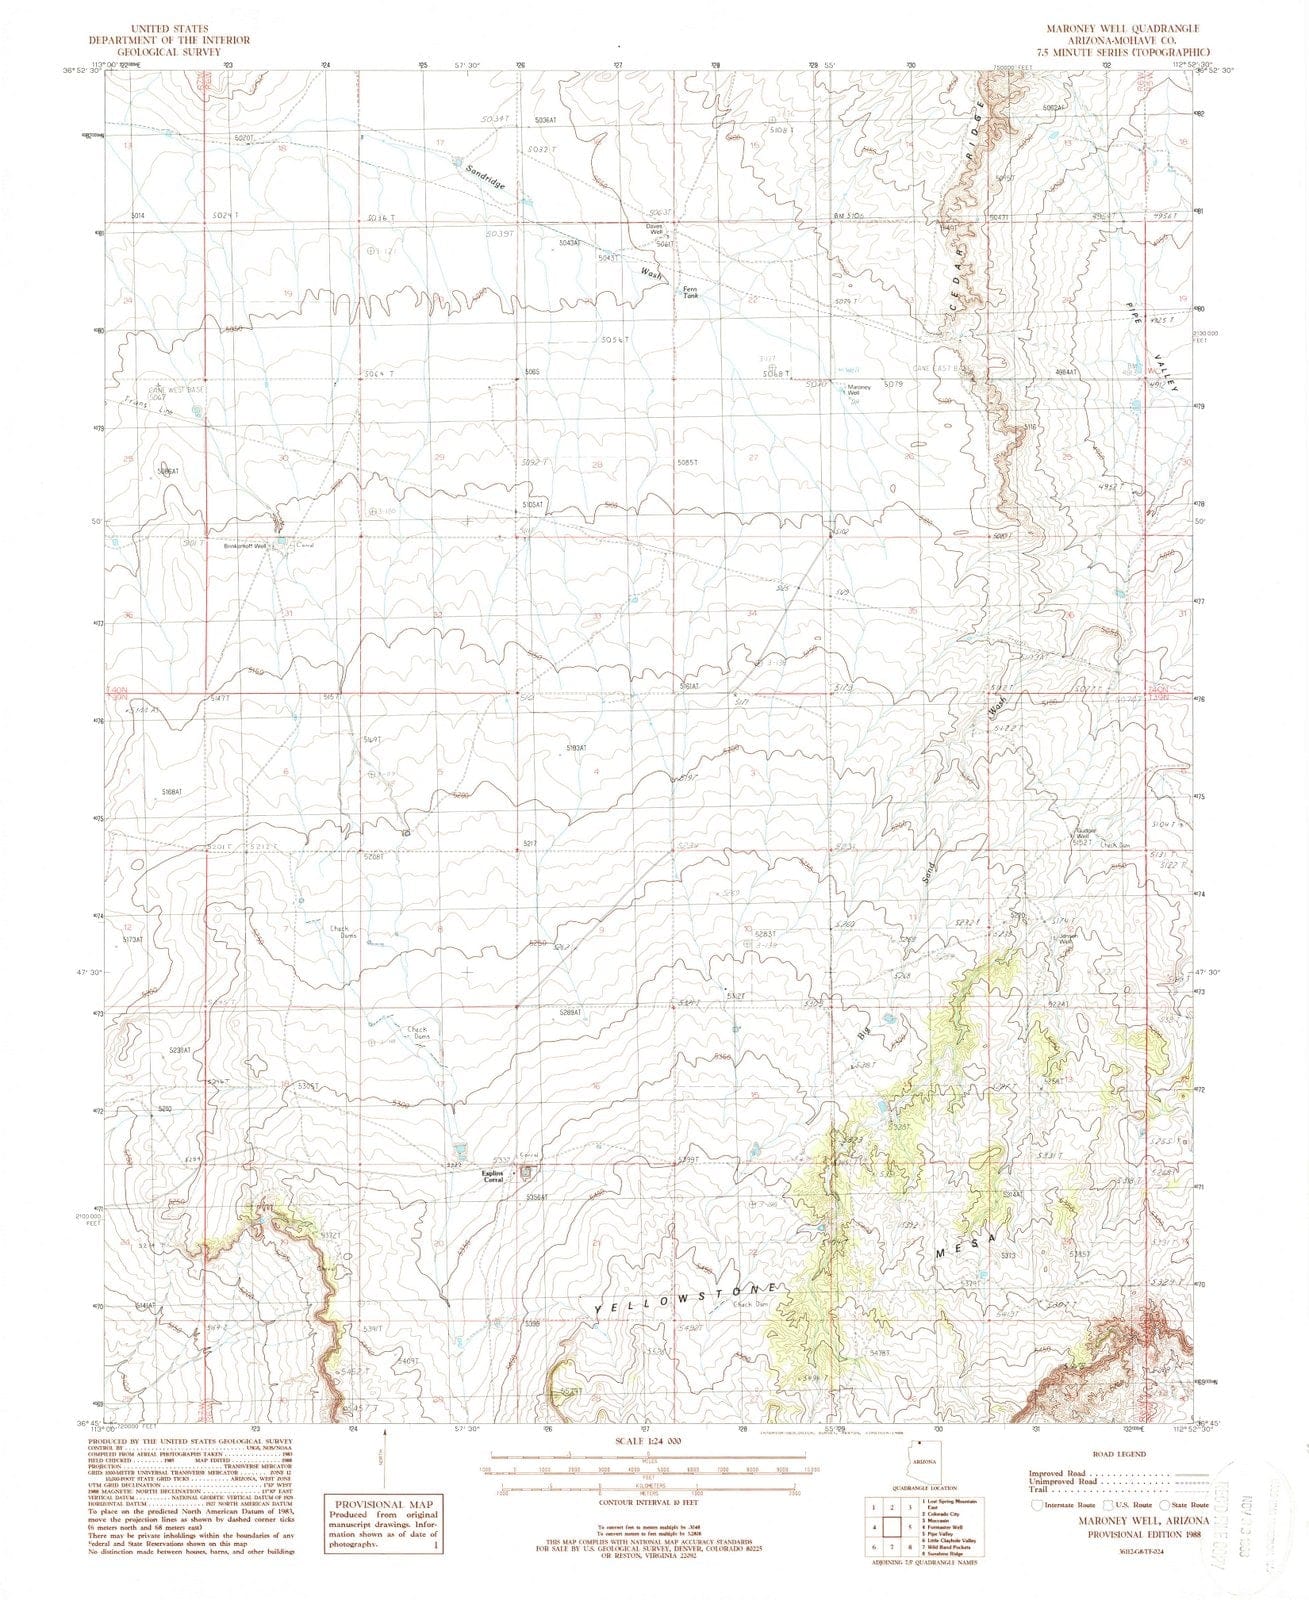 1988 Maroney Well, AZ - Arizona - USGS Topographic Map